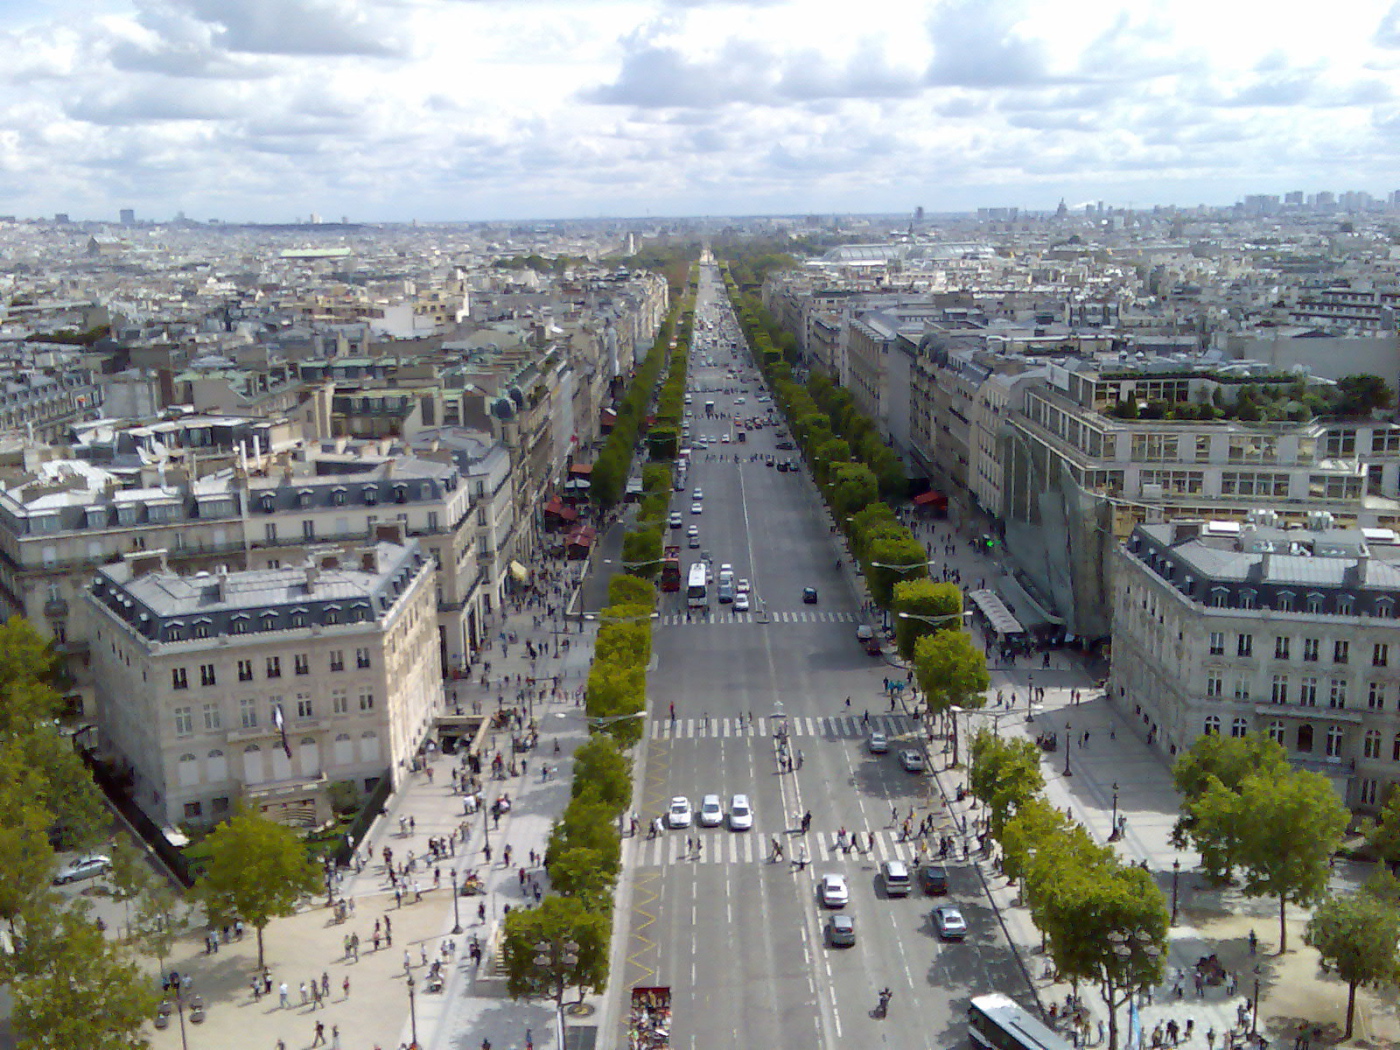 City street in Paris, France